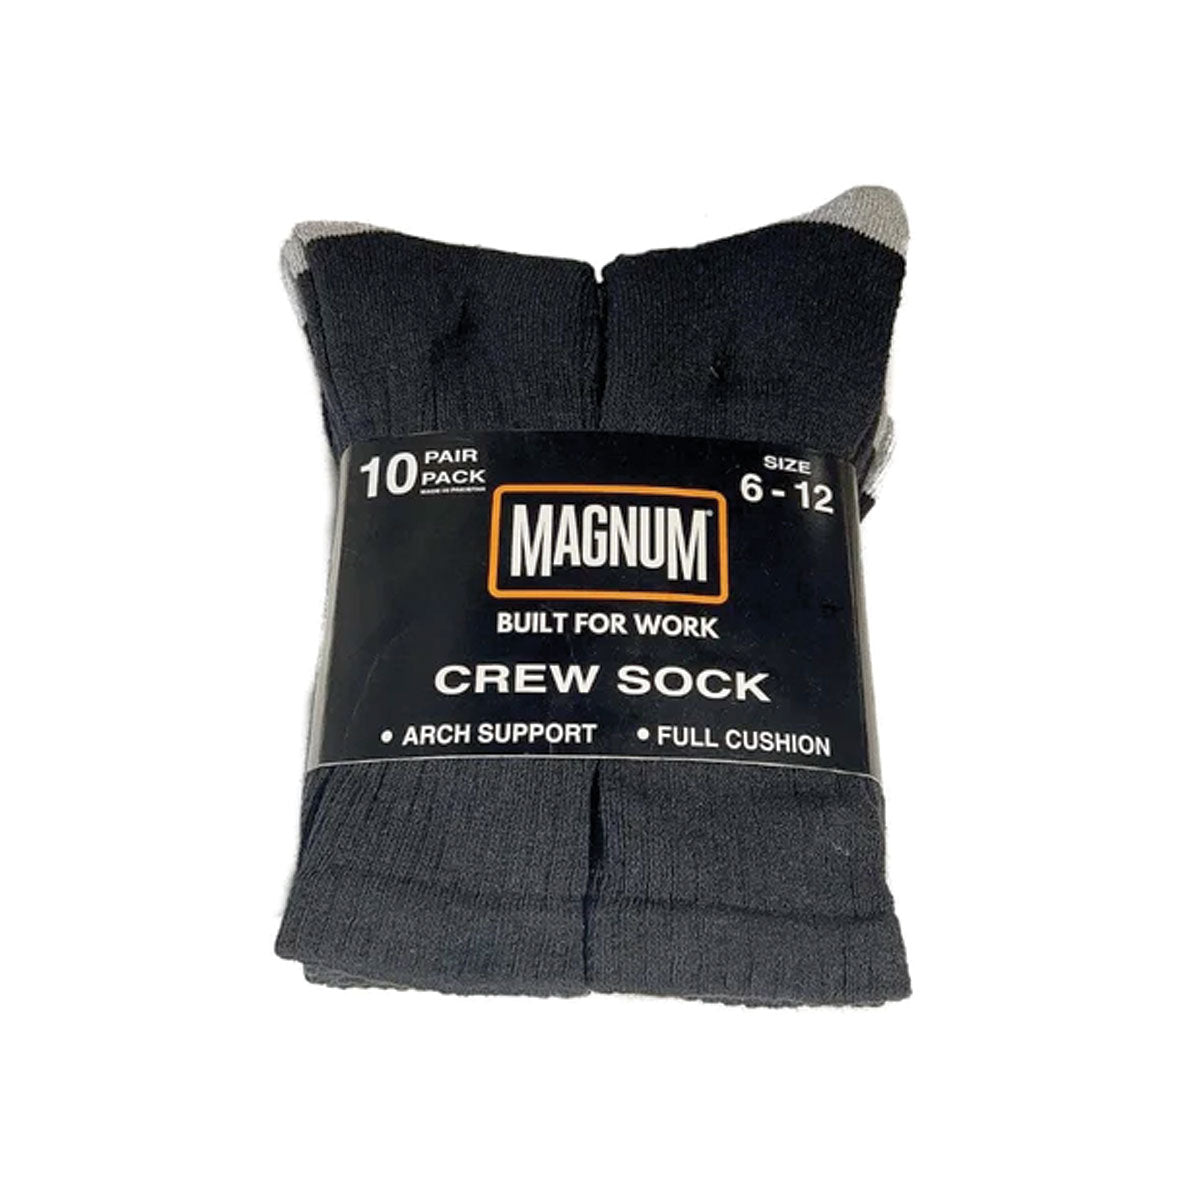 Magnum 10 Pack Crew Sock One Size Black Tactical Distributors Ltd New Zealand